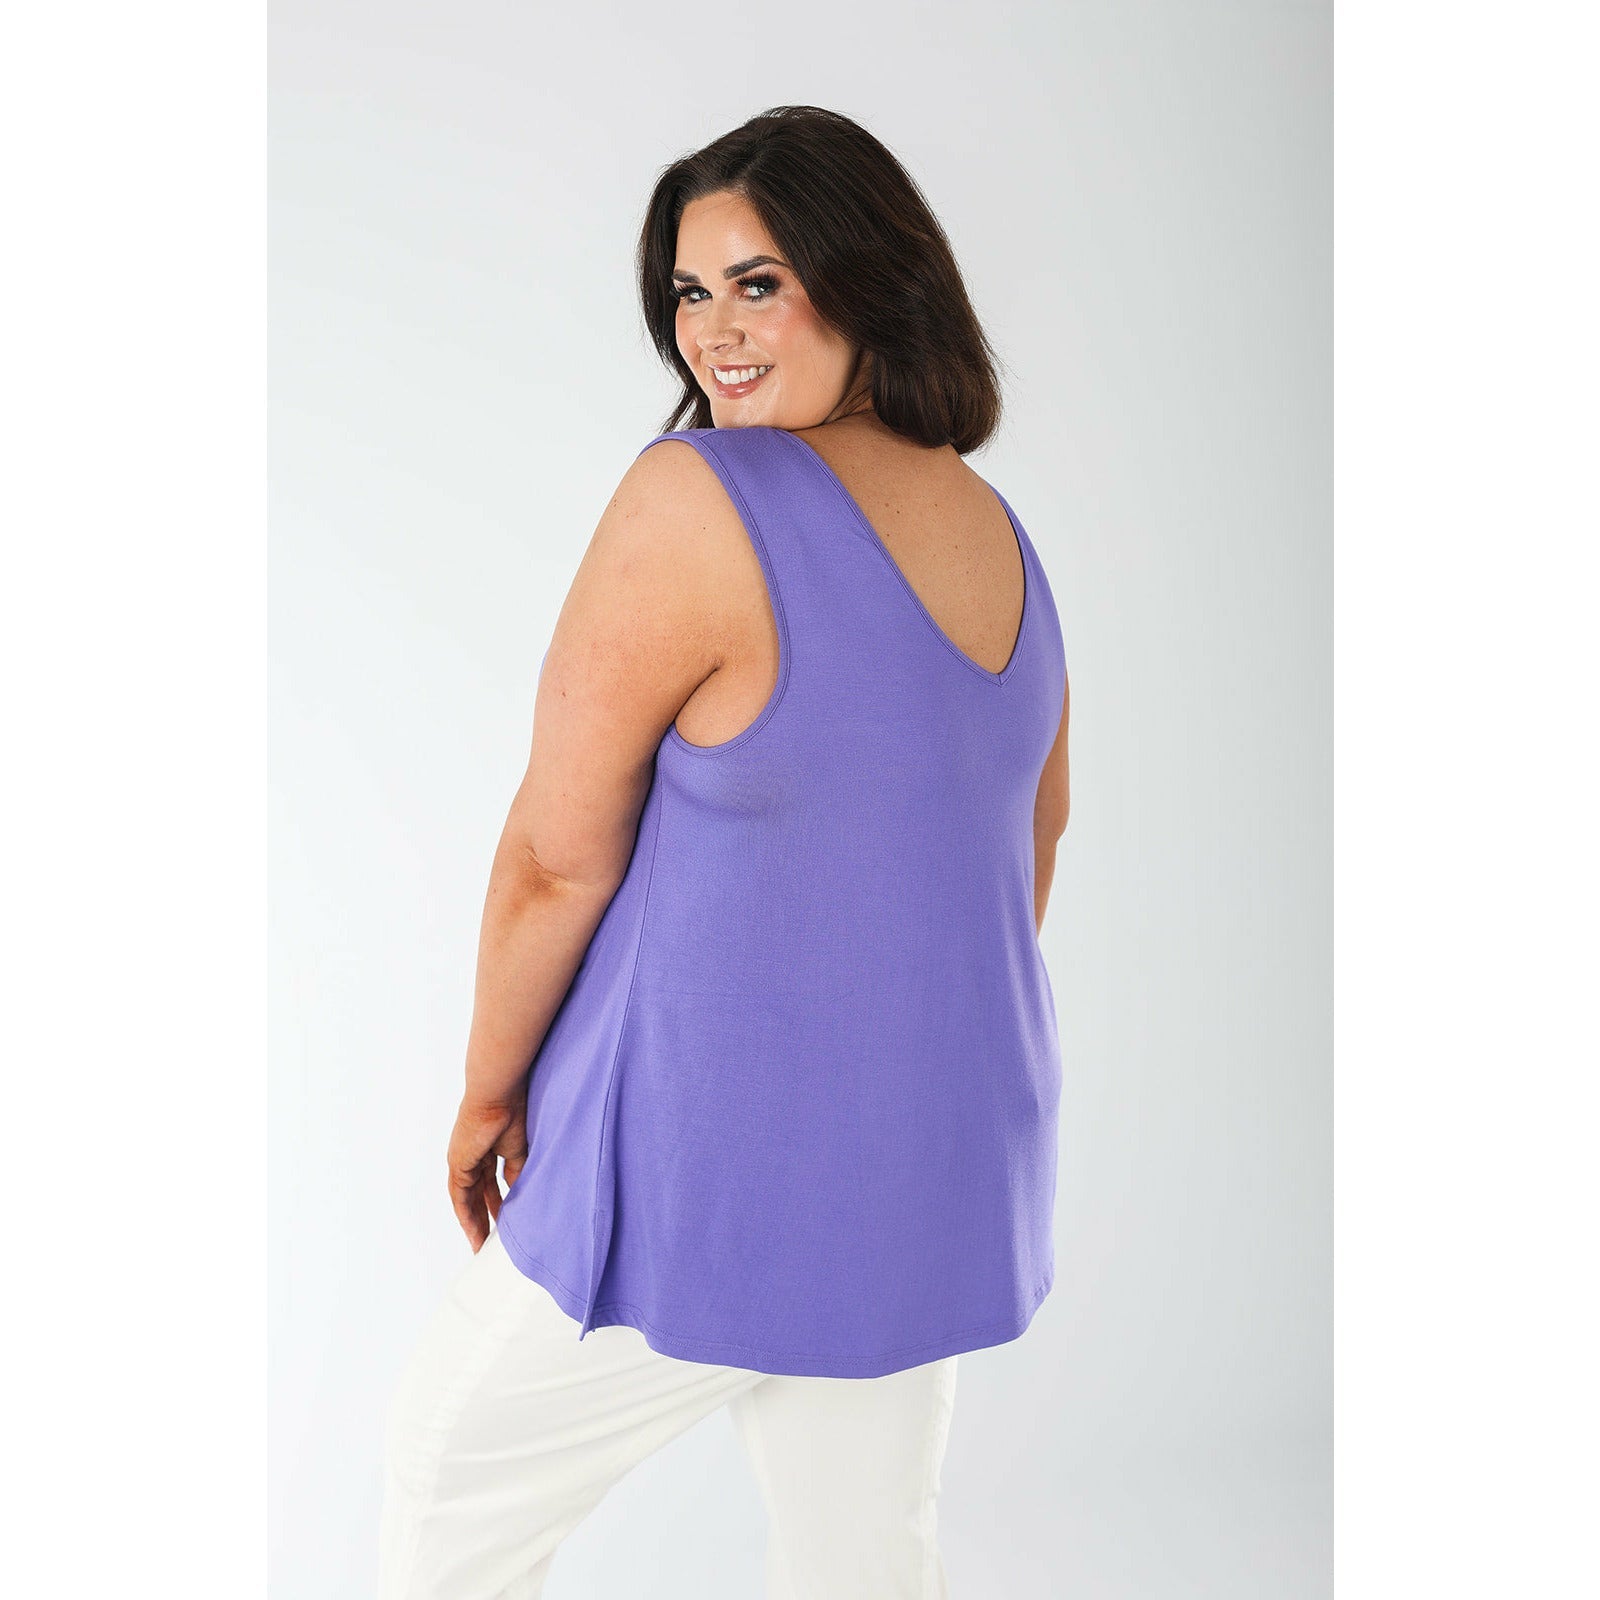 Mellomi Amy Reversible Vest Top in Purple - Wardrobe Plus